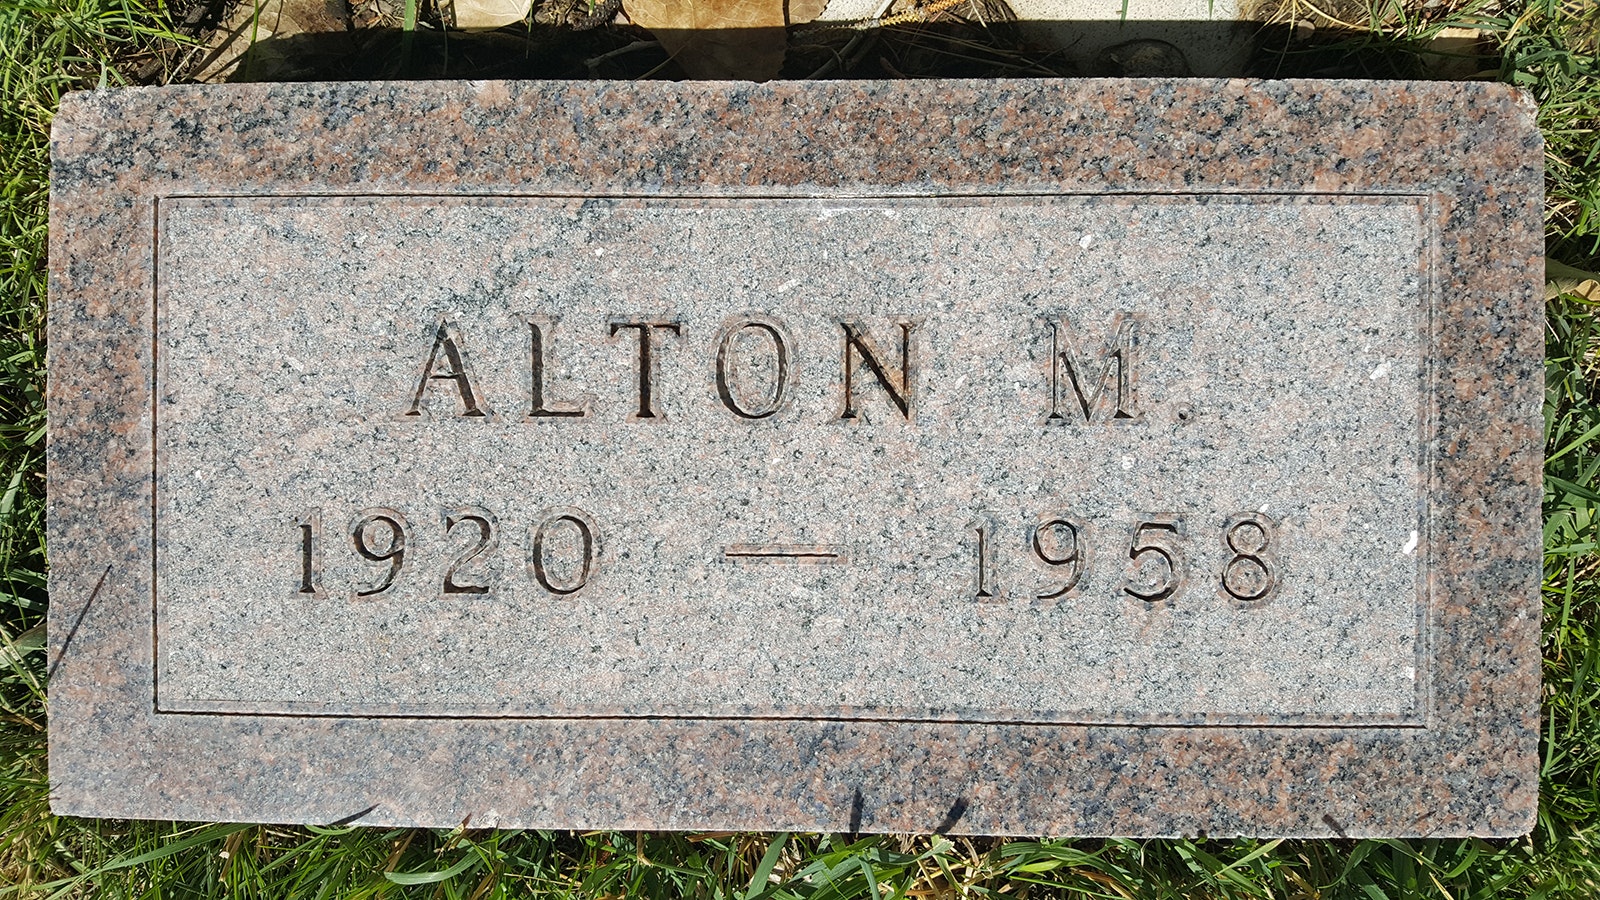 Pvt. Alton More of Casper, Wyoming, was killed in a car crash in 1958. He's buried in his hometown of Casper.